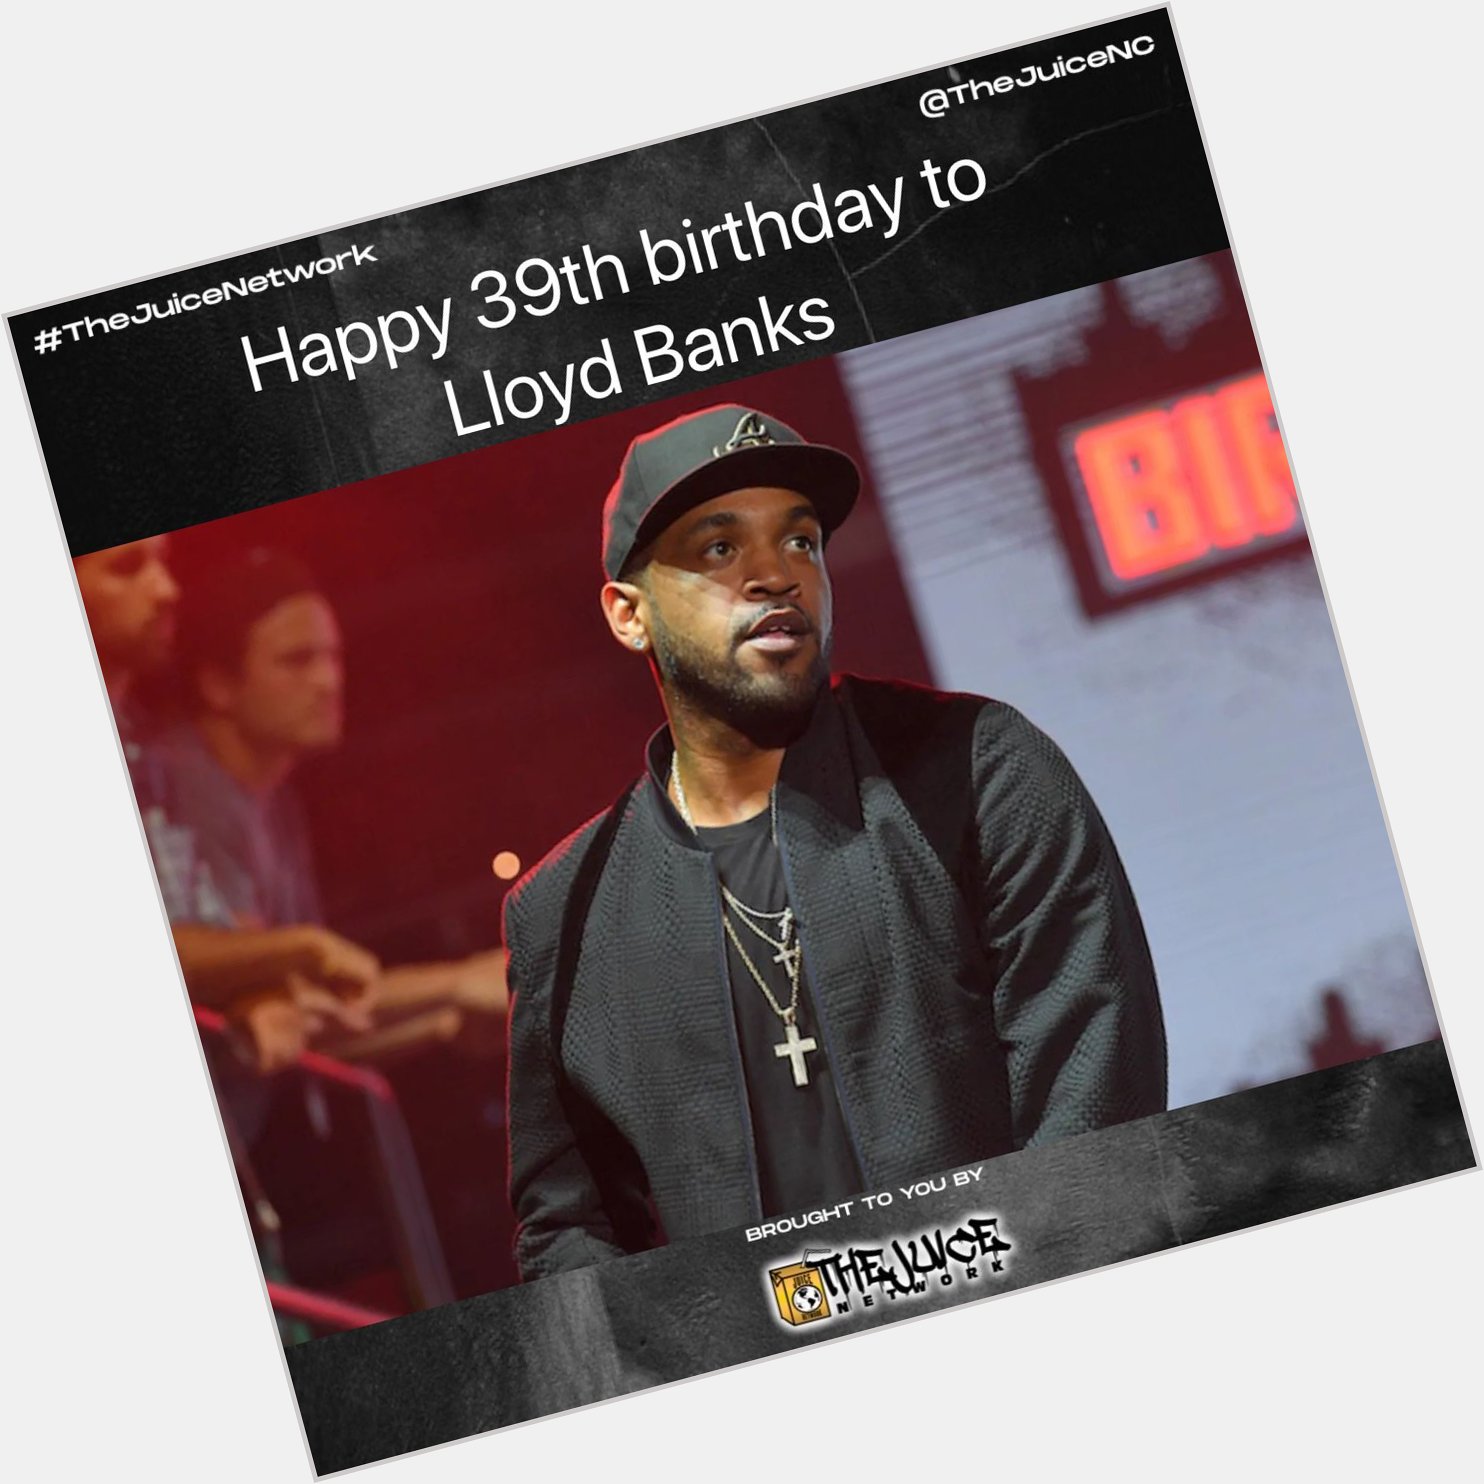 Happy 39th birthday to Lloyd Banks!    